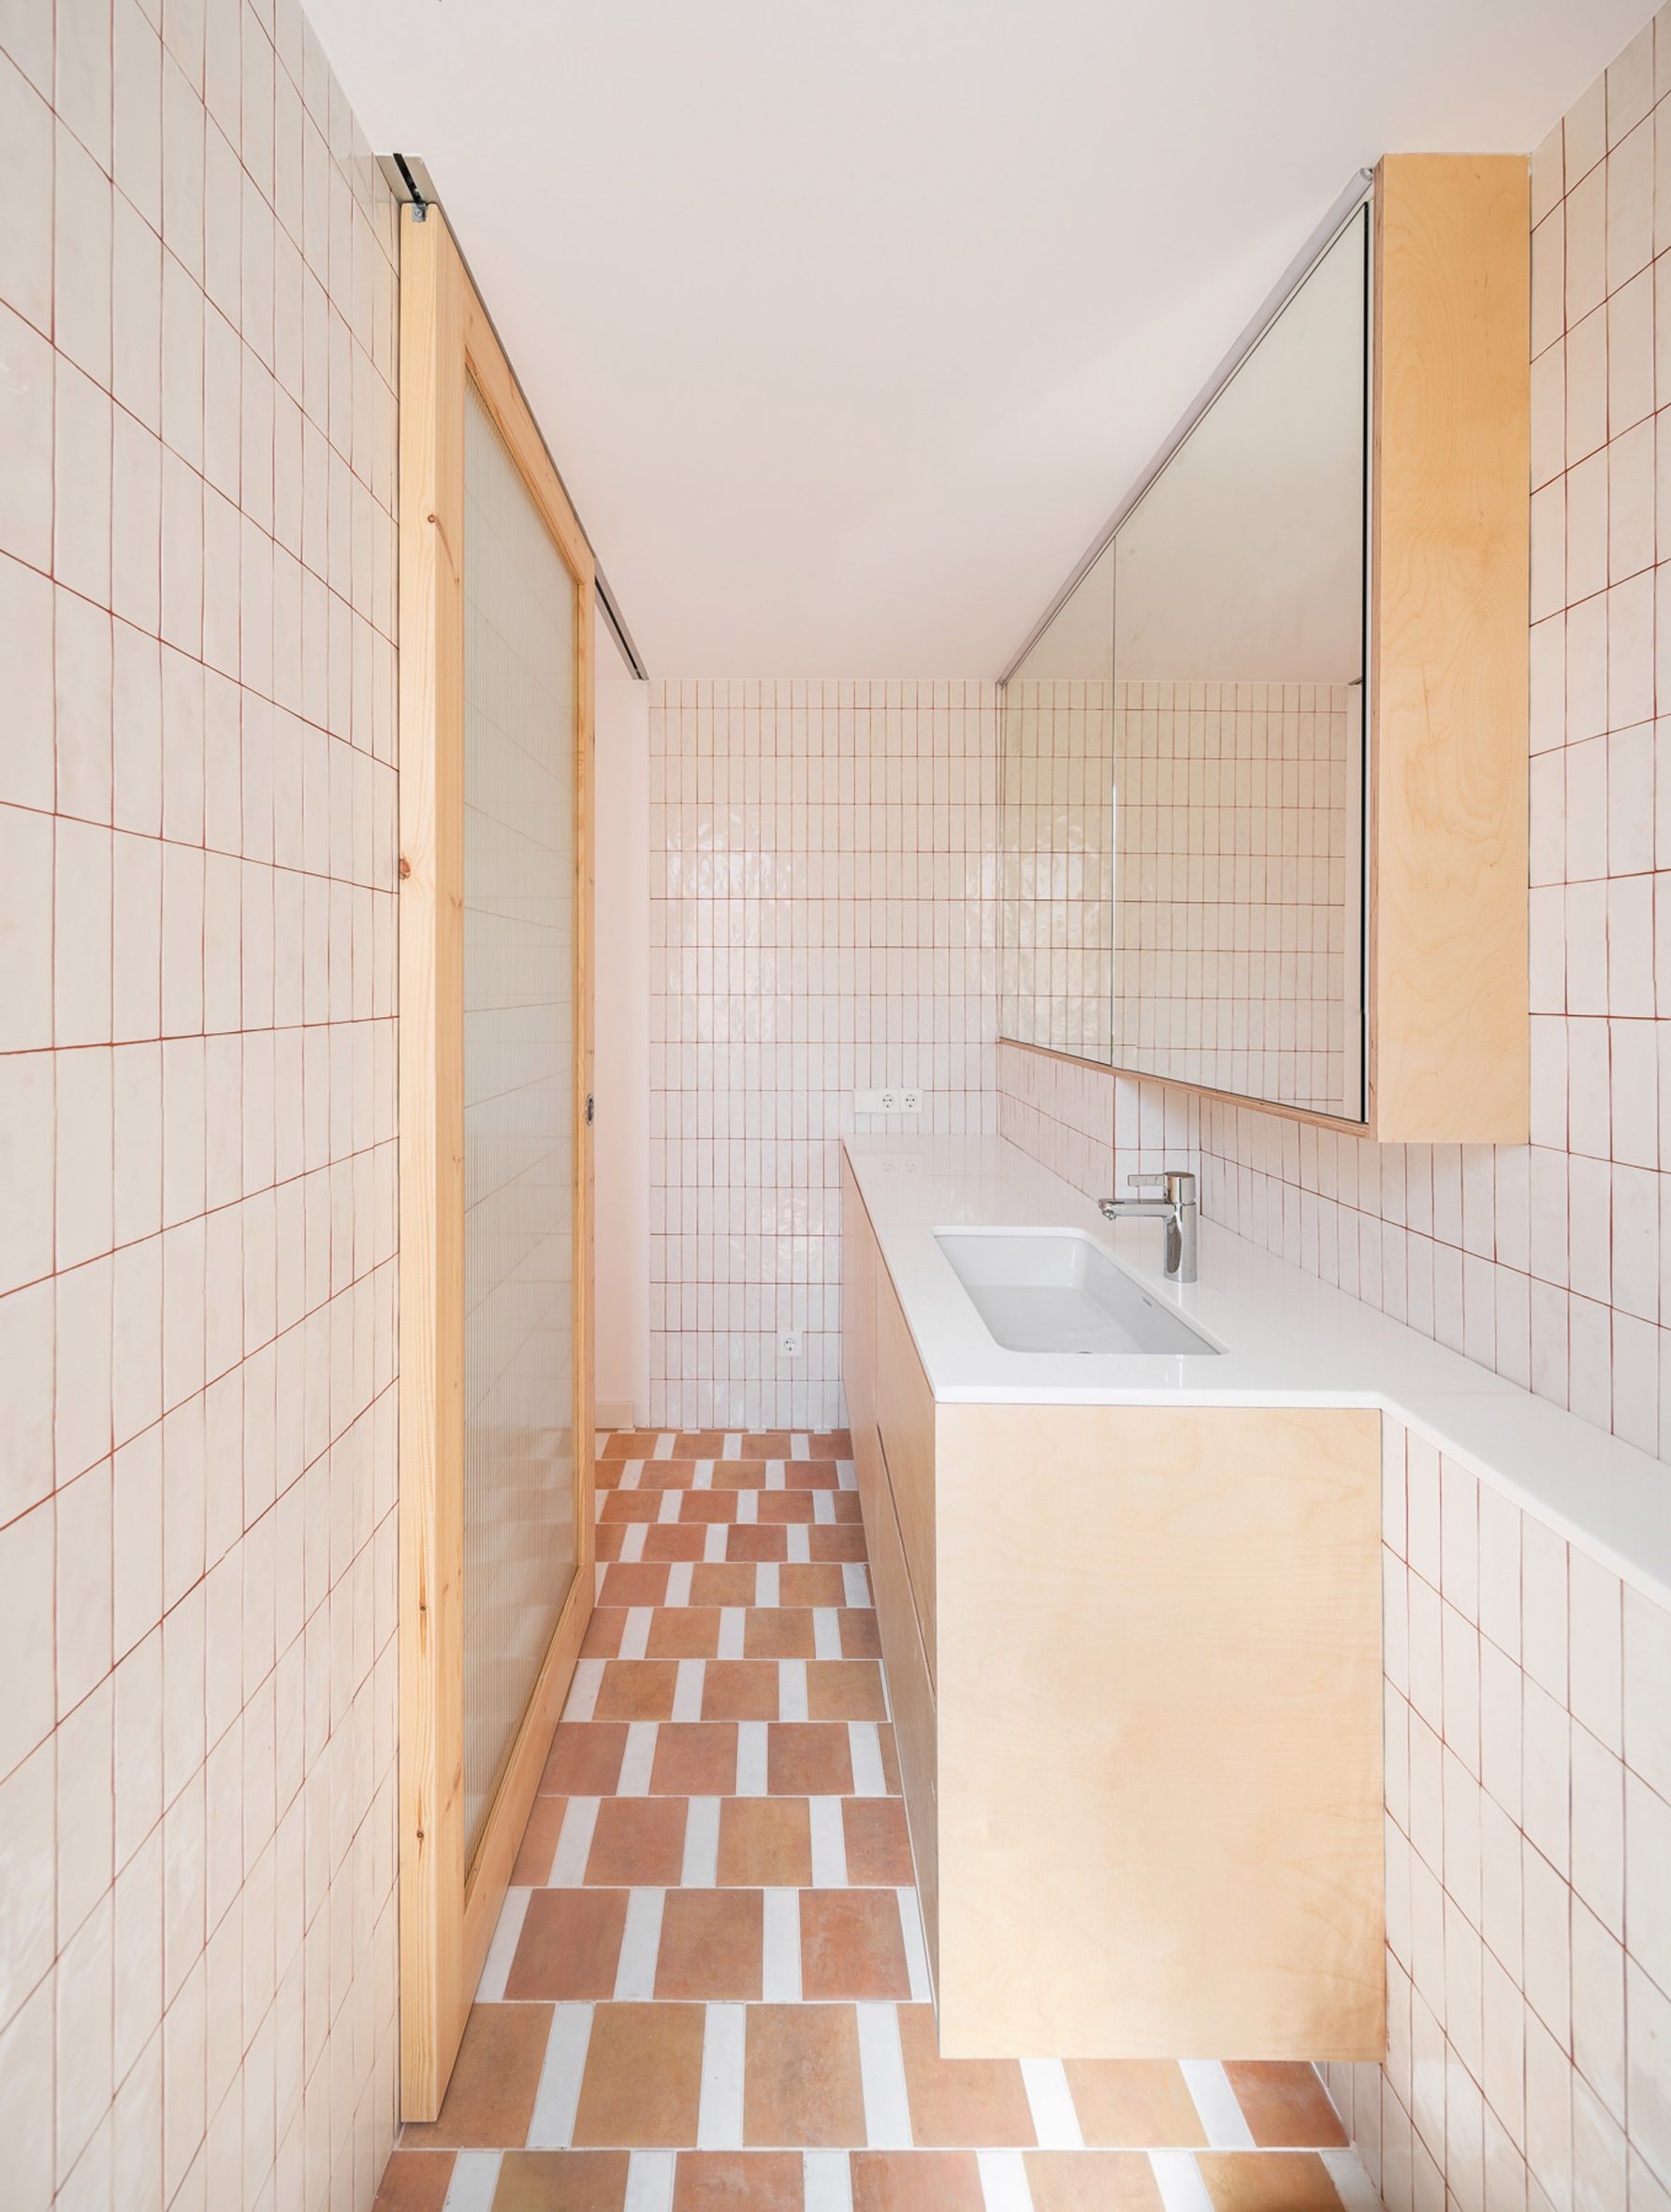 Bathroom of Barcelona apartment with terracotta tiles